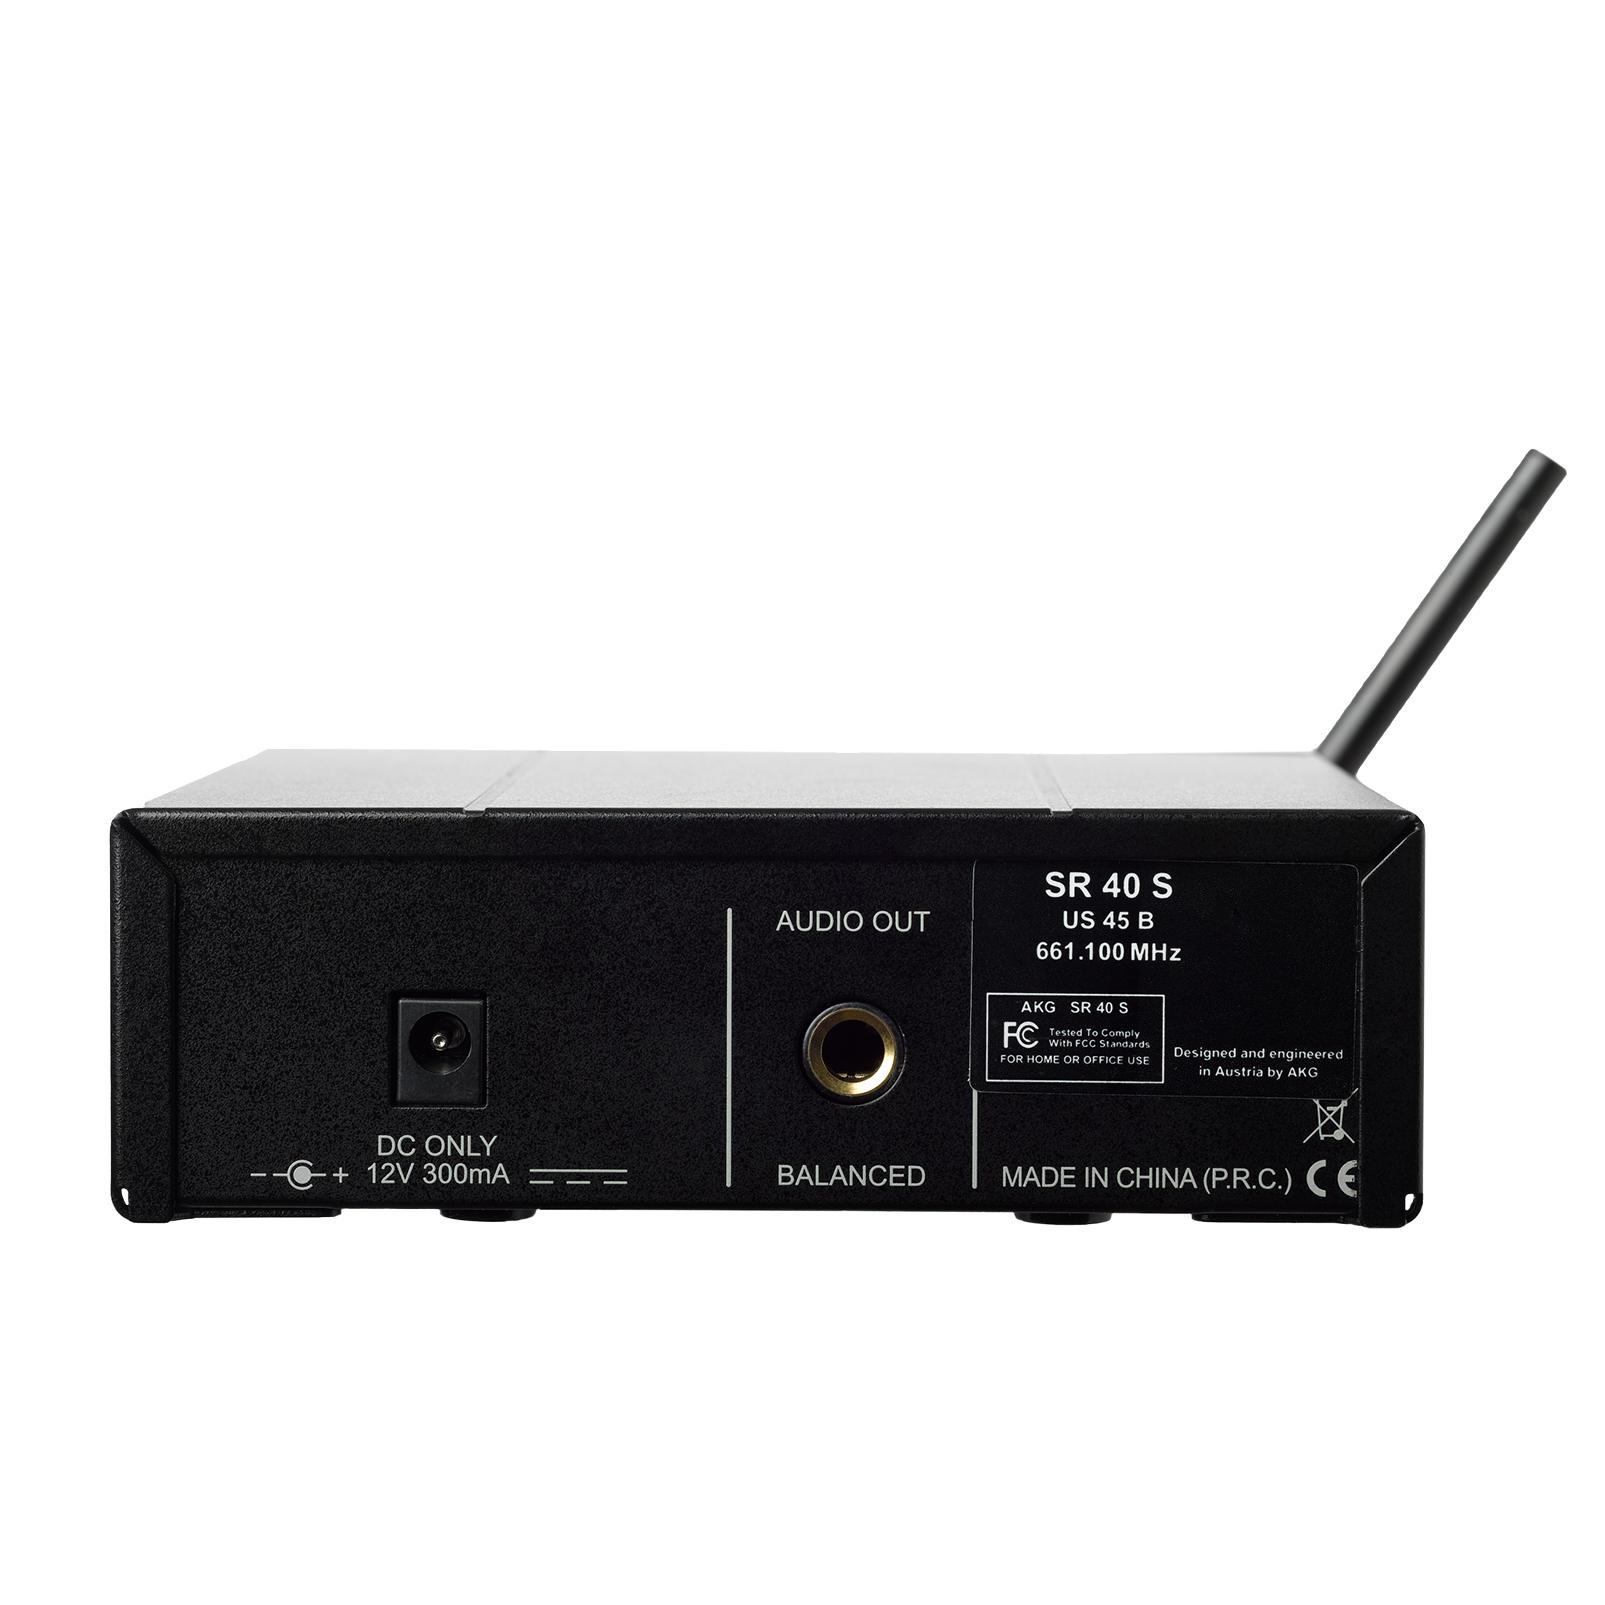 SR40 MINI - Black - Single wireless stationary receiver - Back